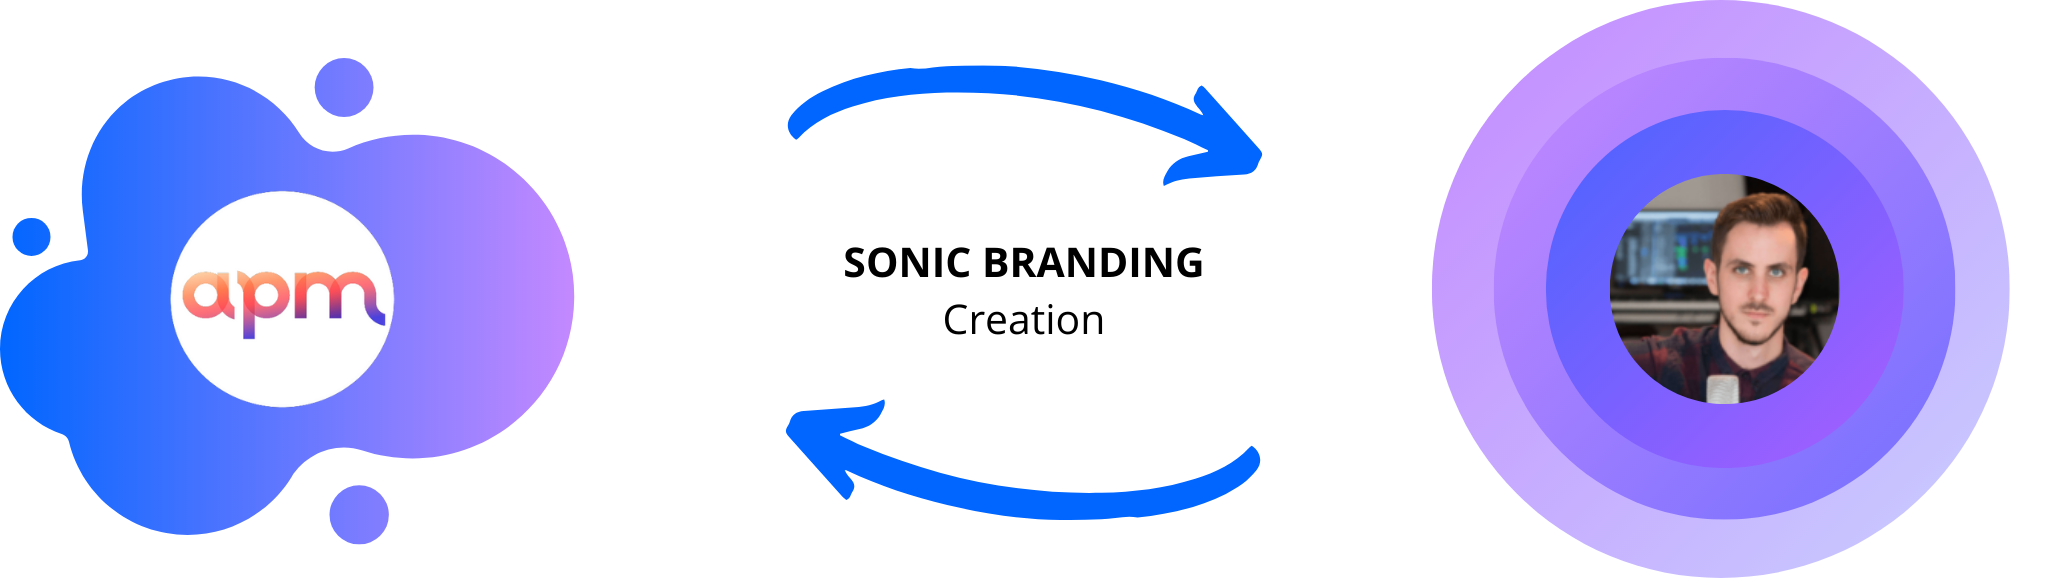 Sonic Branding Creation-apm